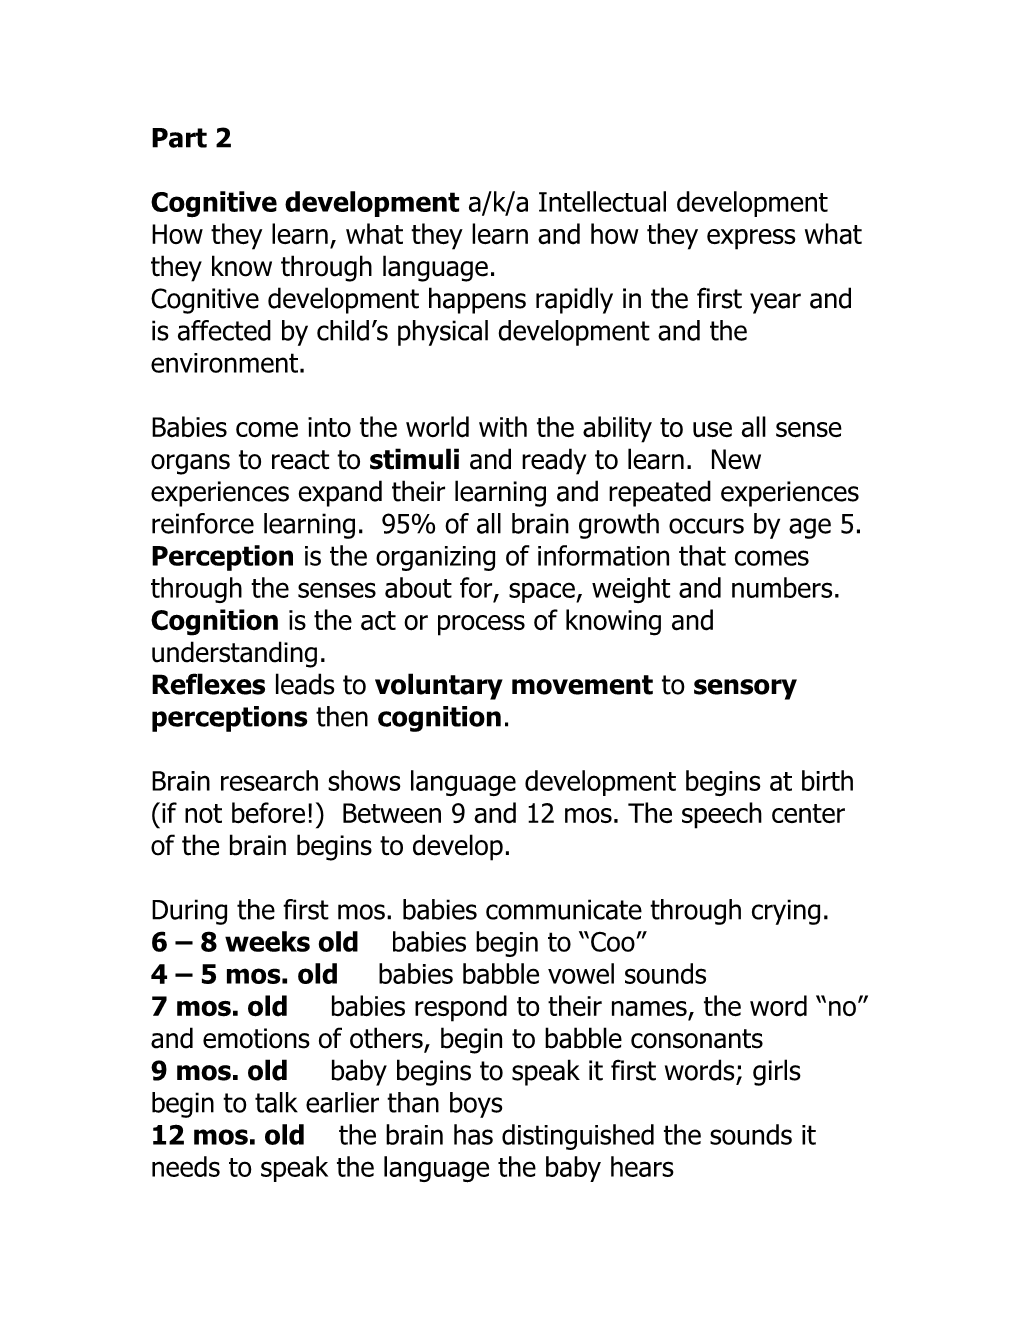 Cognitive Development A/K/A Intellectual Development